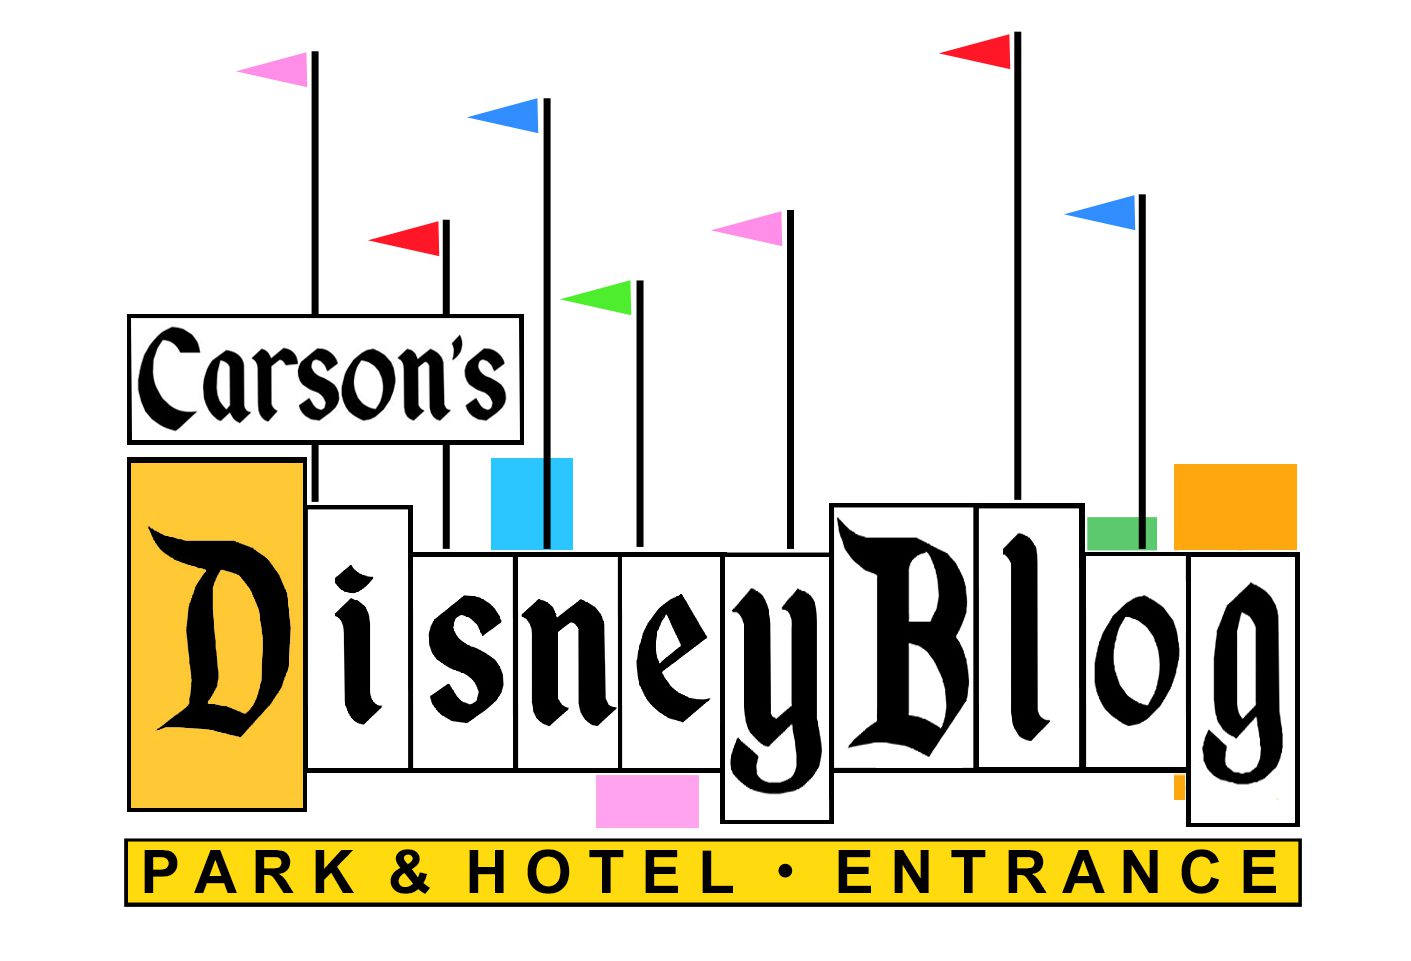 Carson's Disney Blog